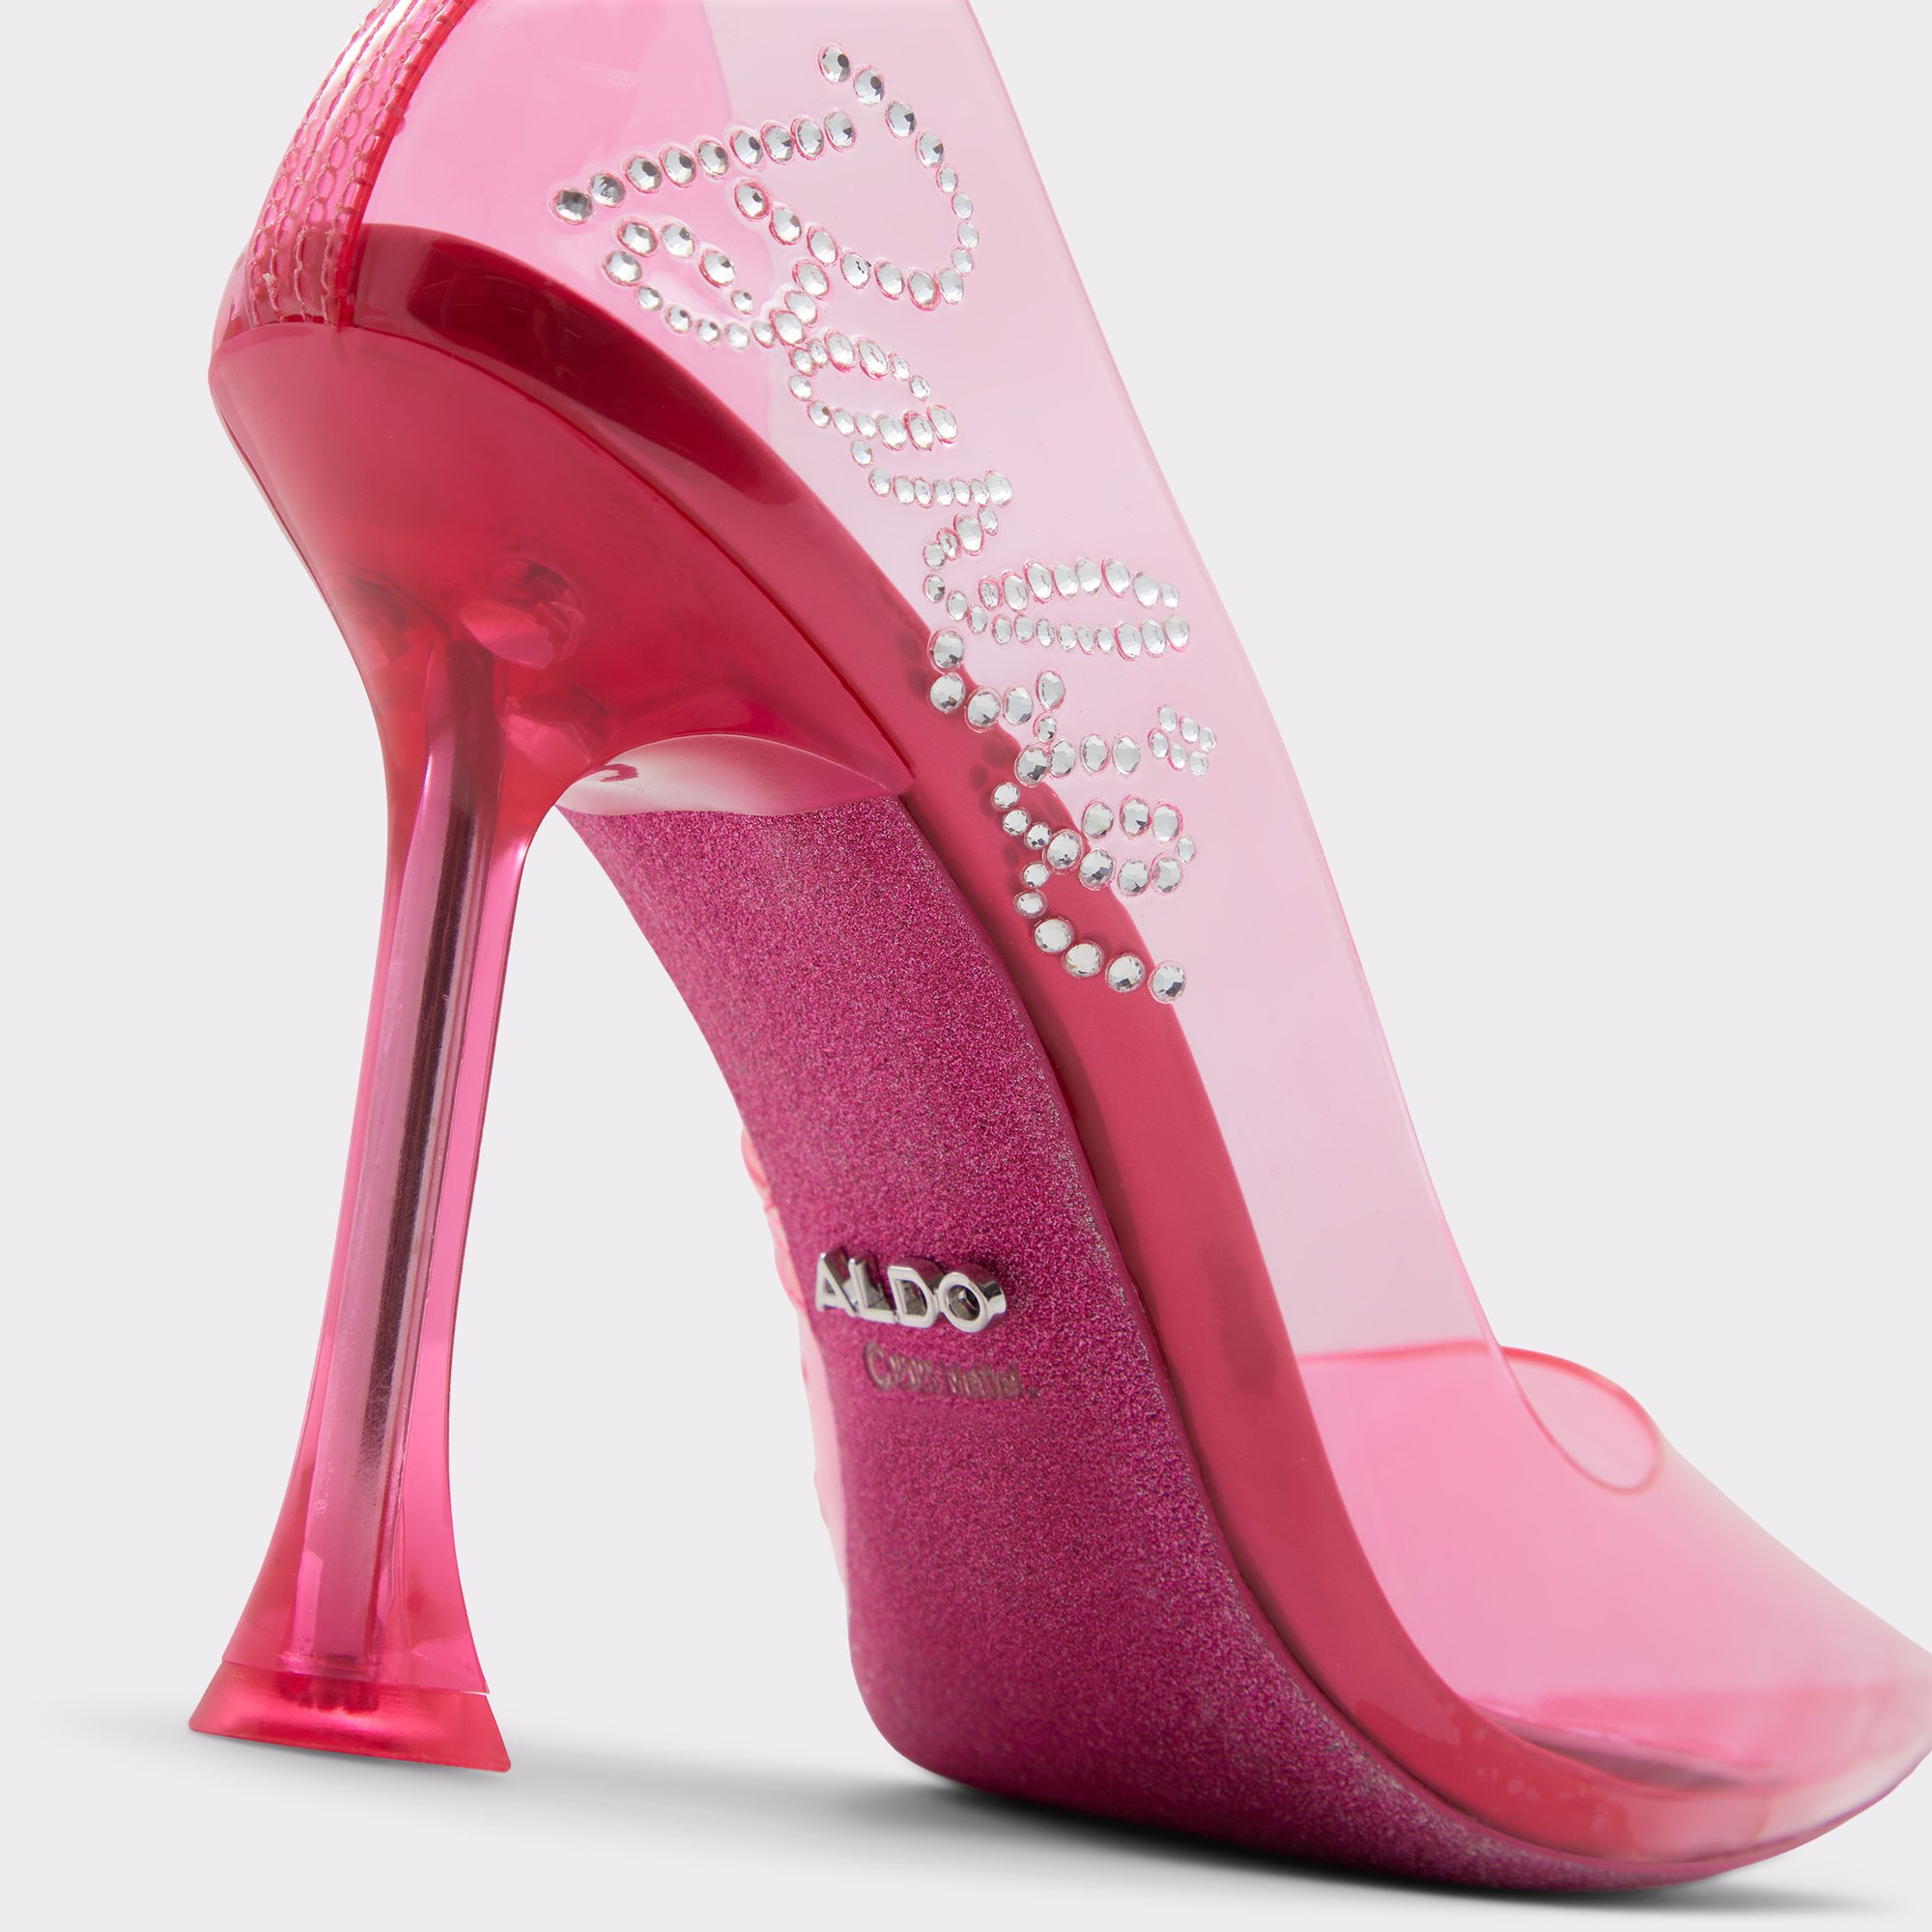 The ALDO x Barbie Collection Has Hot Pink Heels